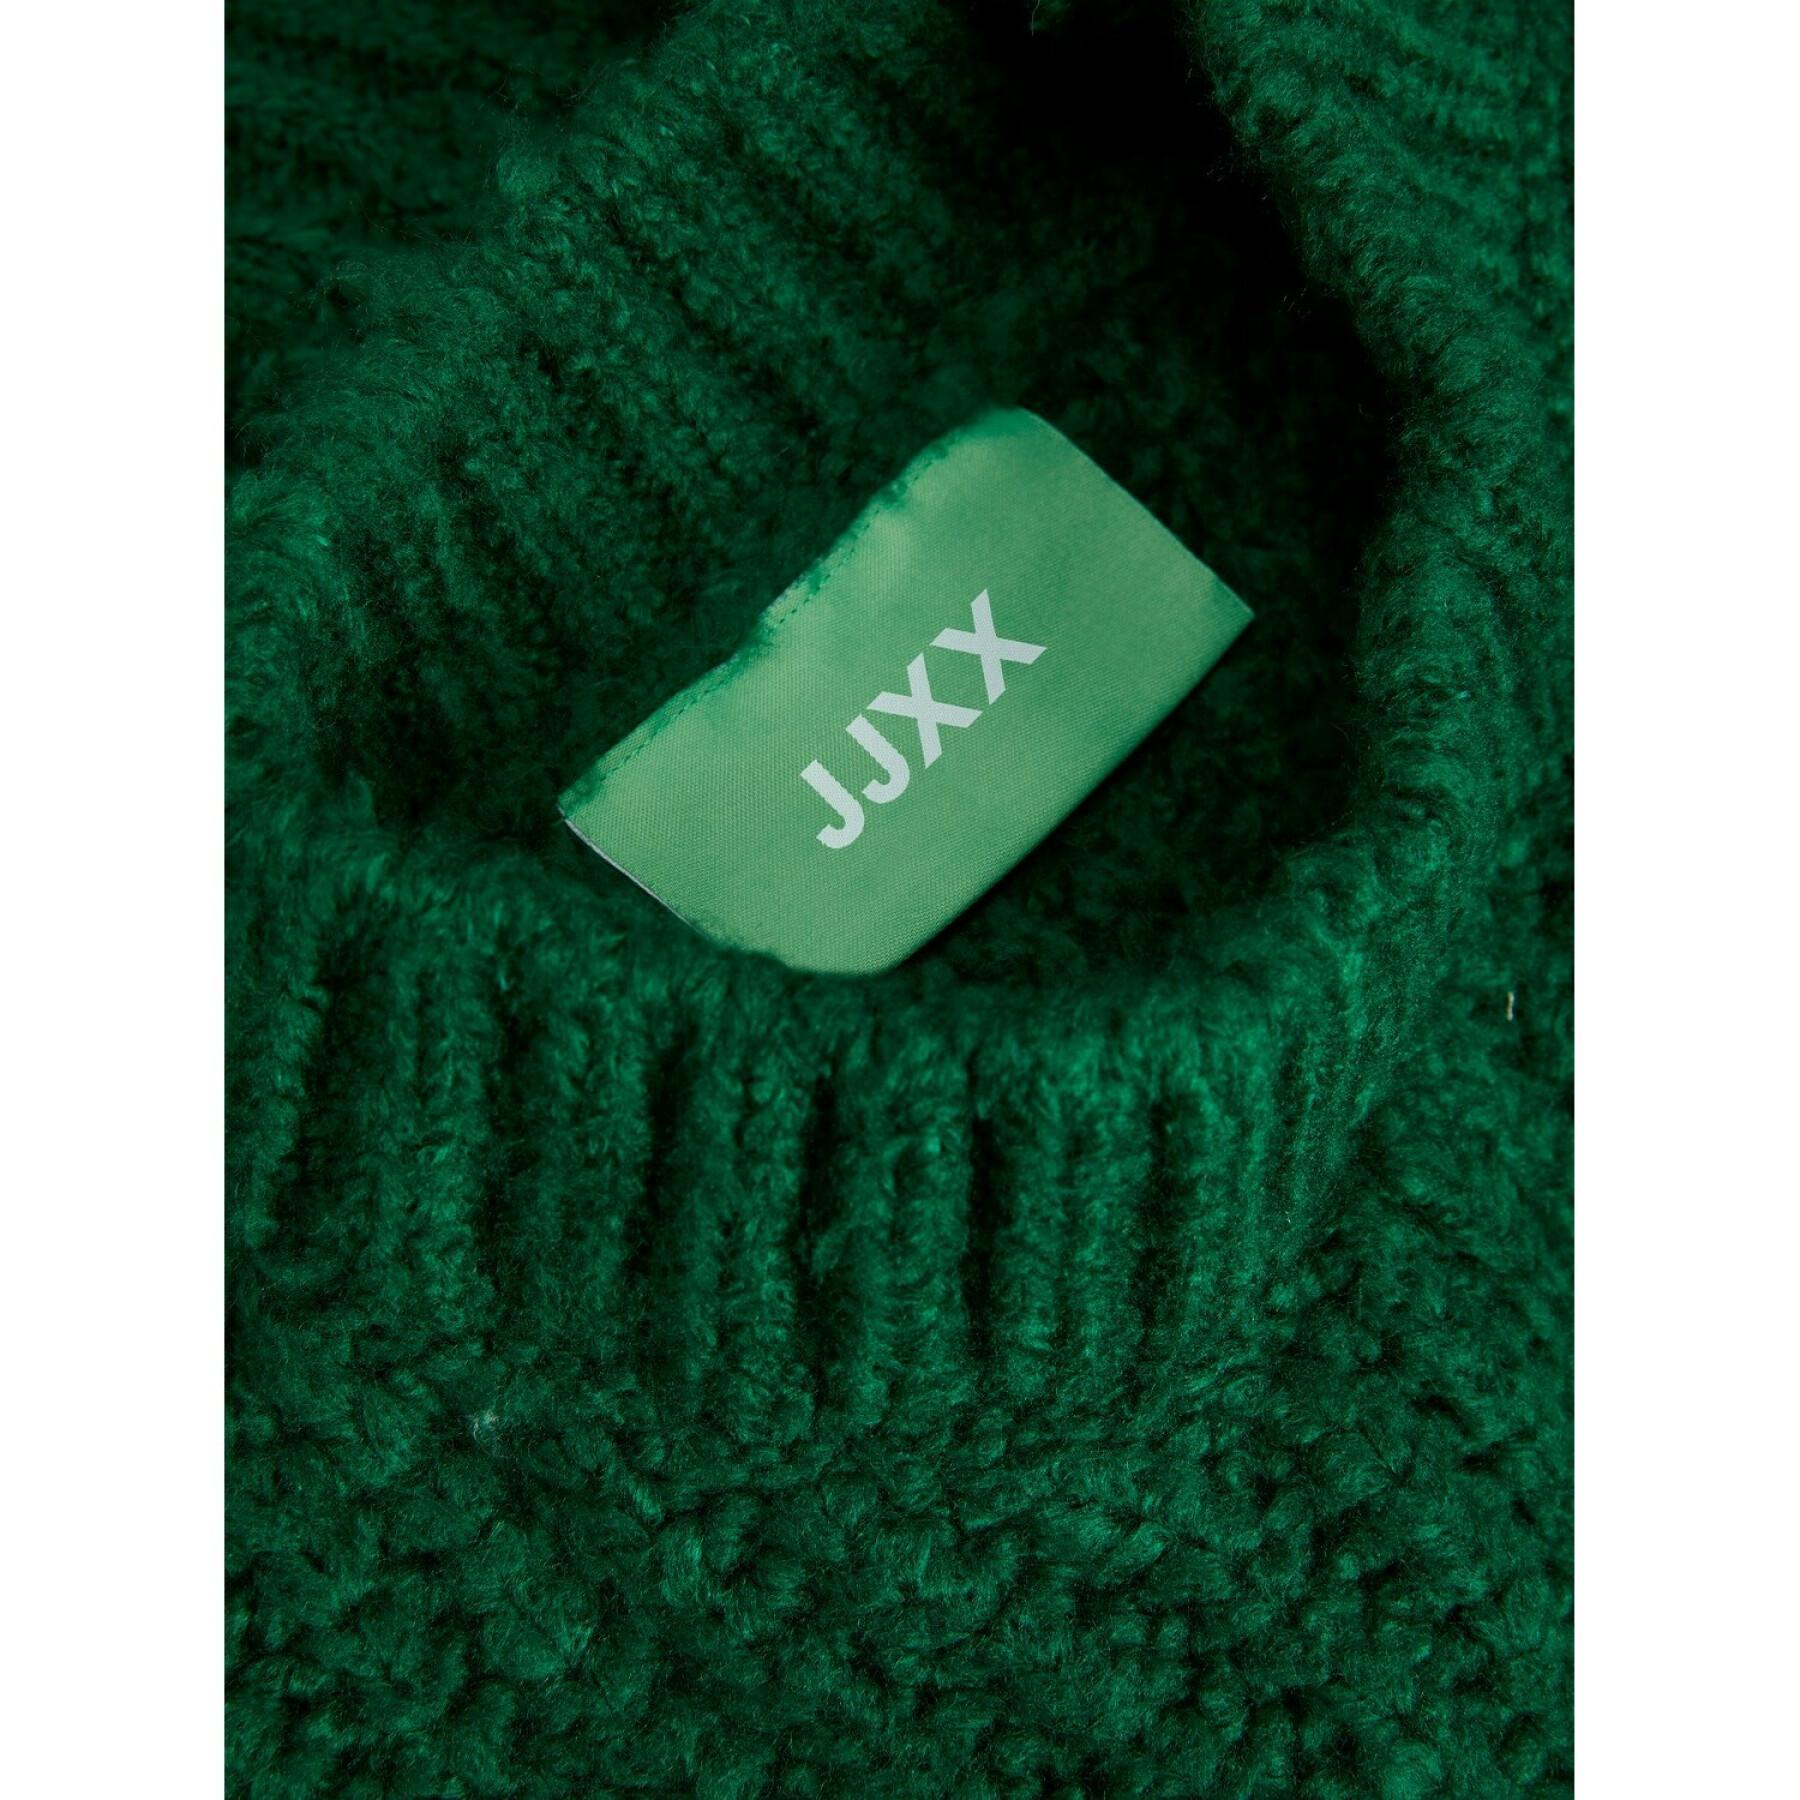 Women's long-sleeved sweater JJXX maxime